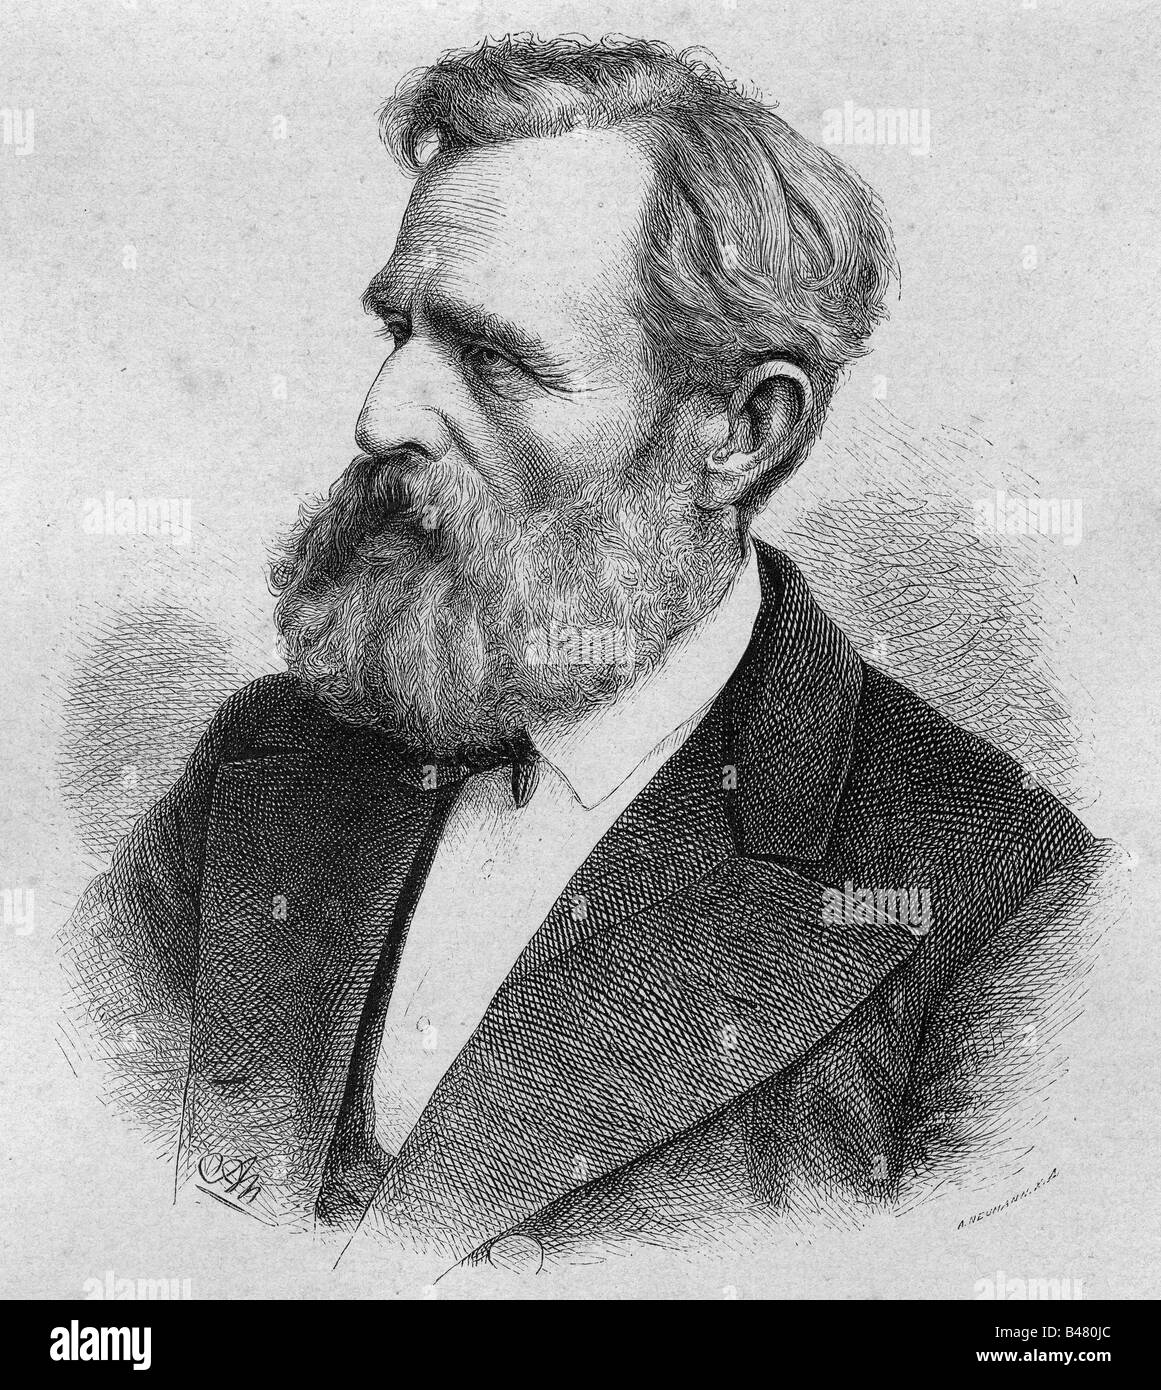 Lessing, Carl Friedrich, 15.2. 1808 - 4.6.1880, peintre allemand, gravure d'Adolf Neumann 1878, Allemagne, XIXe siècle, Karl, Banque D'Images